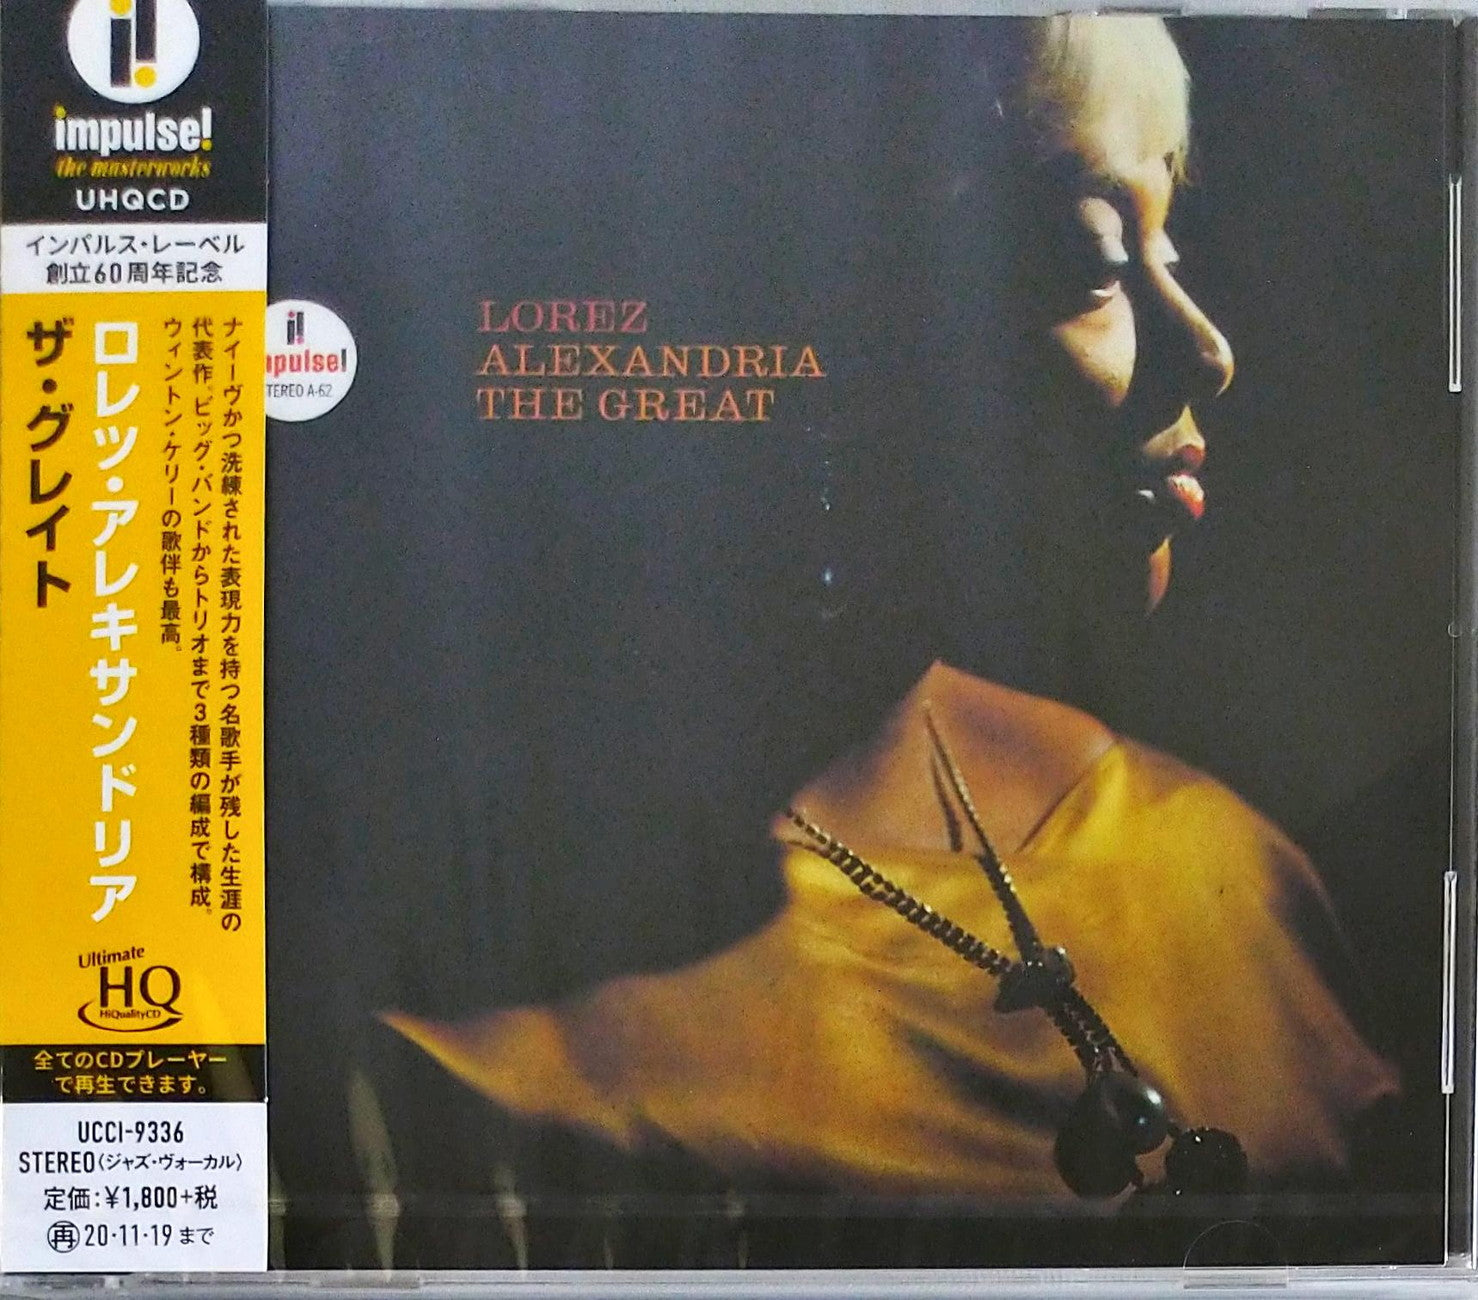 Lorez Alexandria Alexandria The Great Japan Uhqcd Limited Edition Cds Vinyl Japan Store